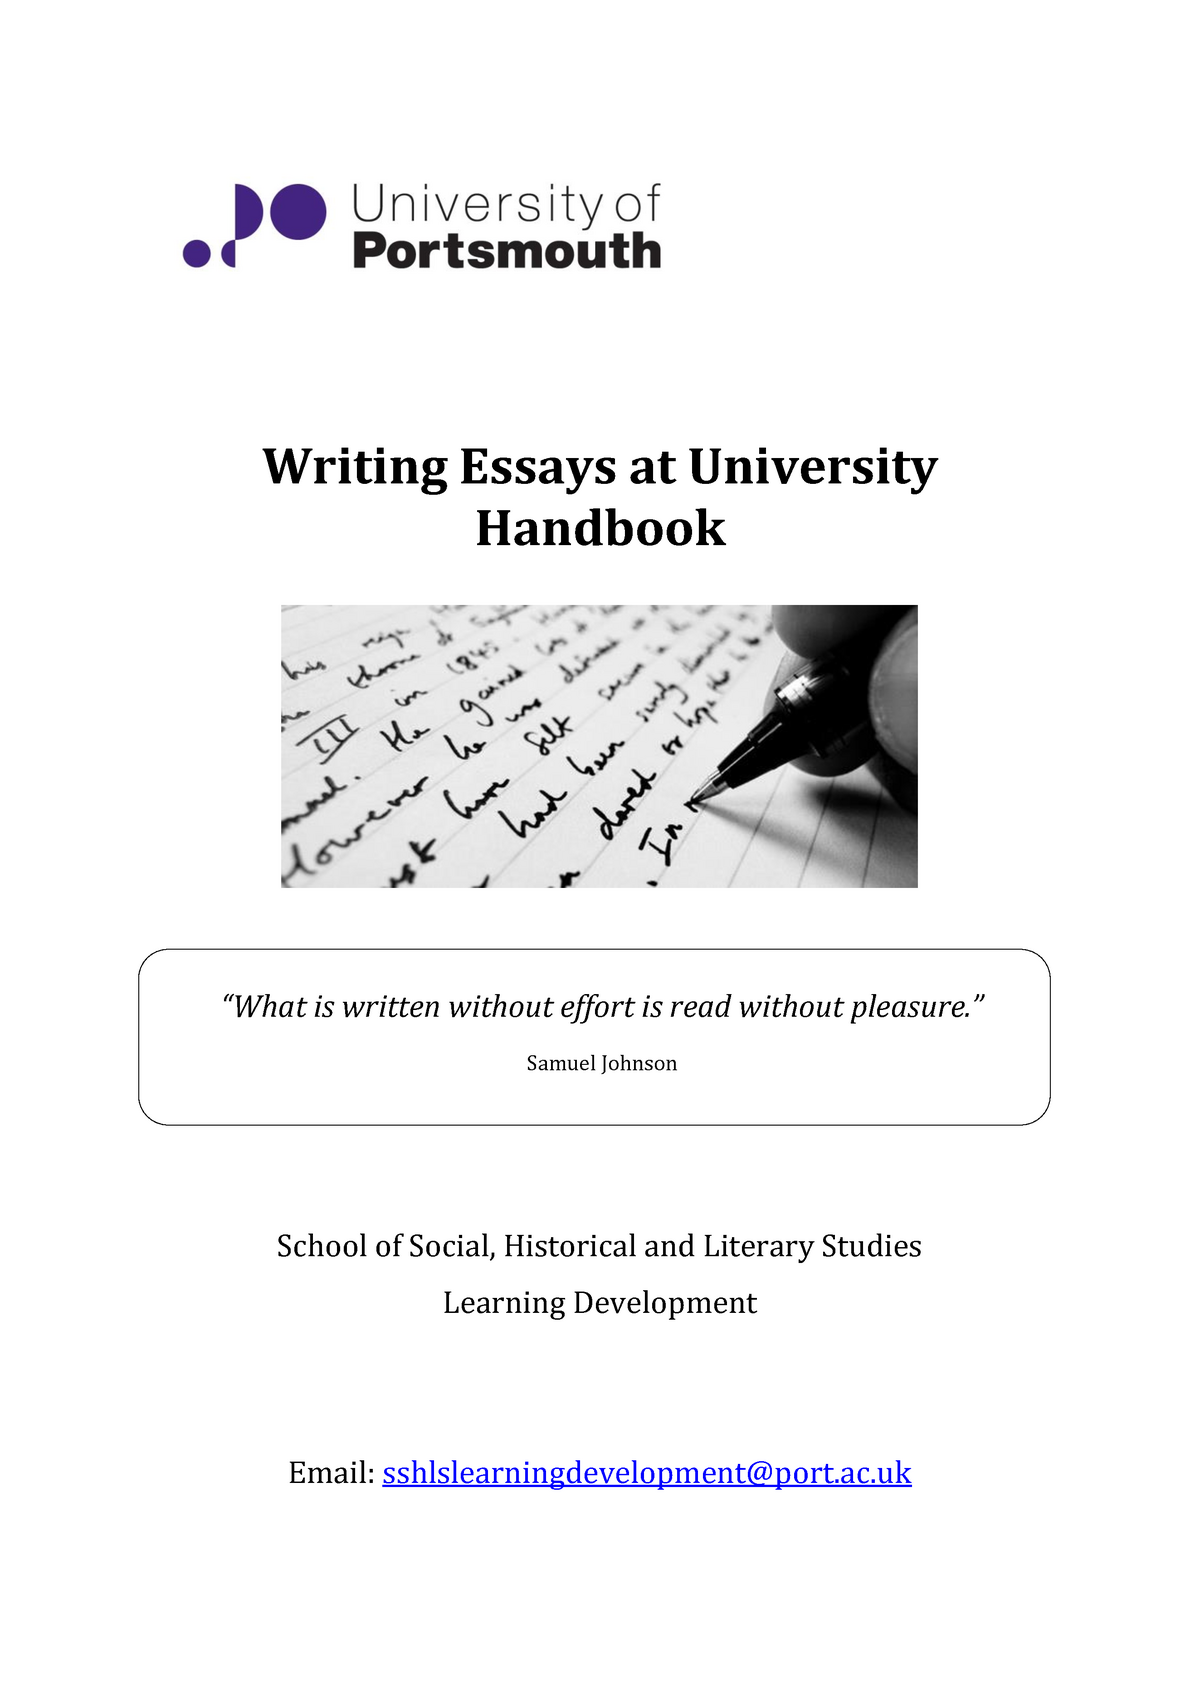 essay writing handbook pdf